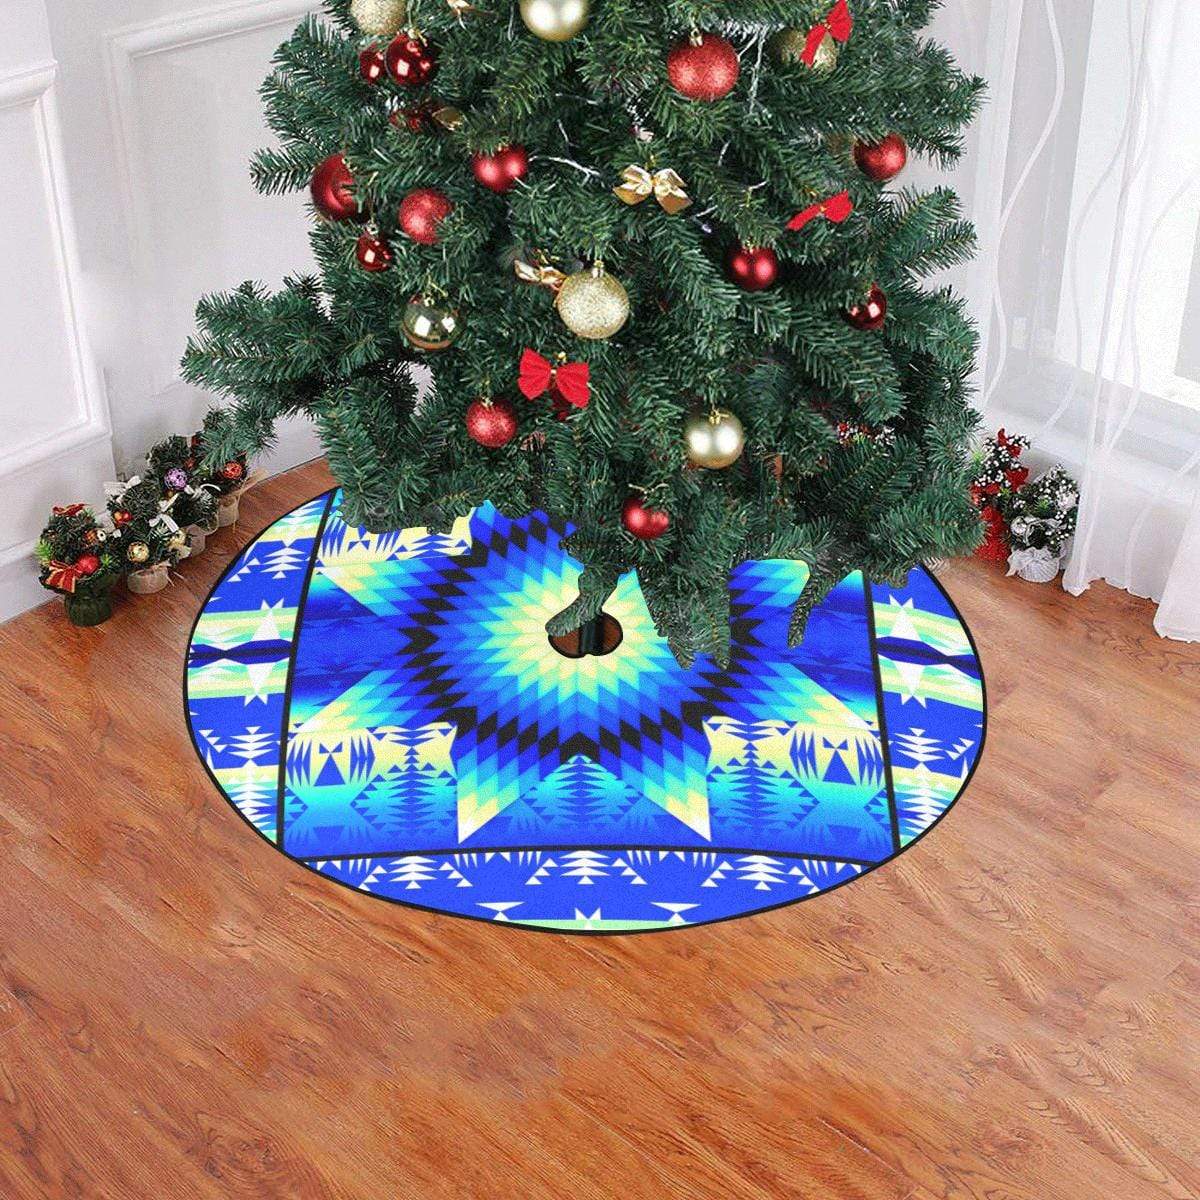 Blue Ridge Star Quilt Christmas Tree Skirt 47" x 47" Christmas Tree Skirt e-joyer 